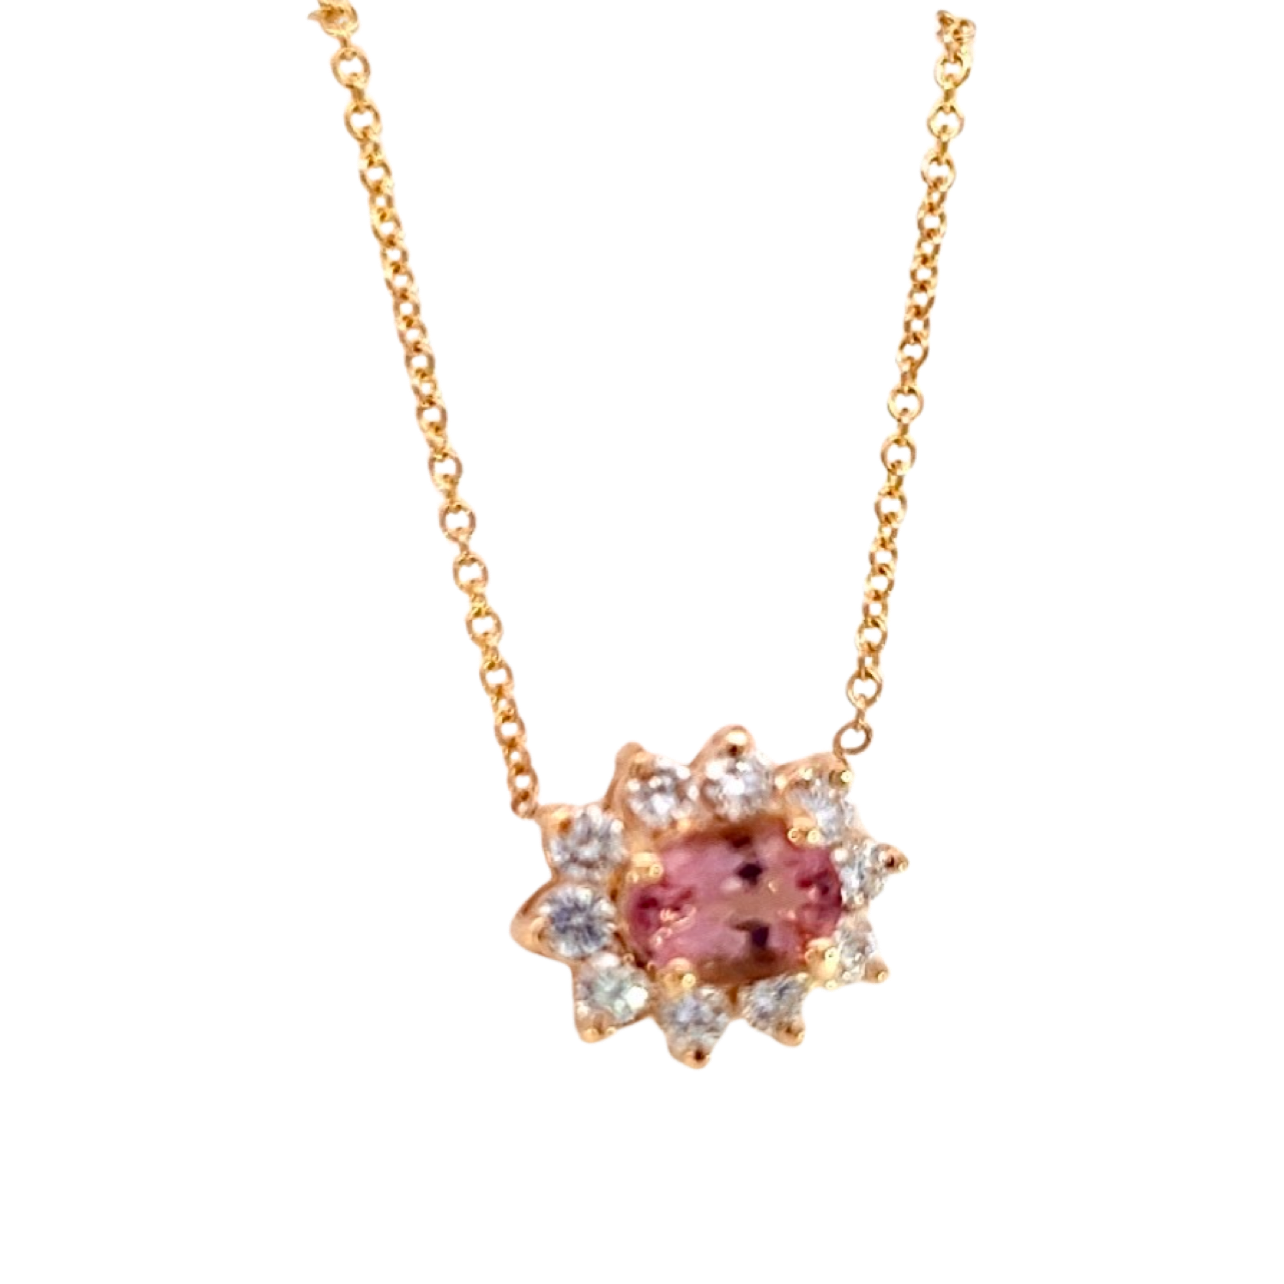 Natural Tourmaline Diamond Pendant Necklace 18" 14k YG 1.40 TCW Certified $3,450 311011 - Certified Fine Jewelry